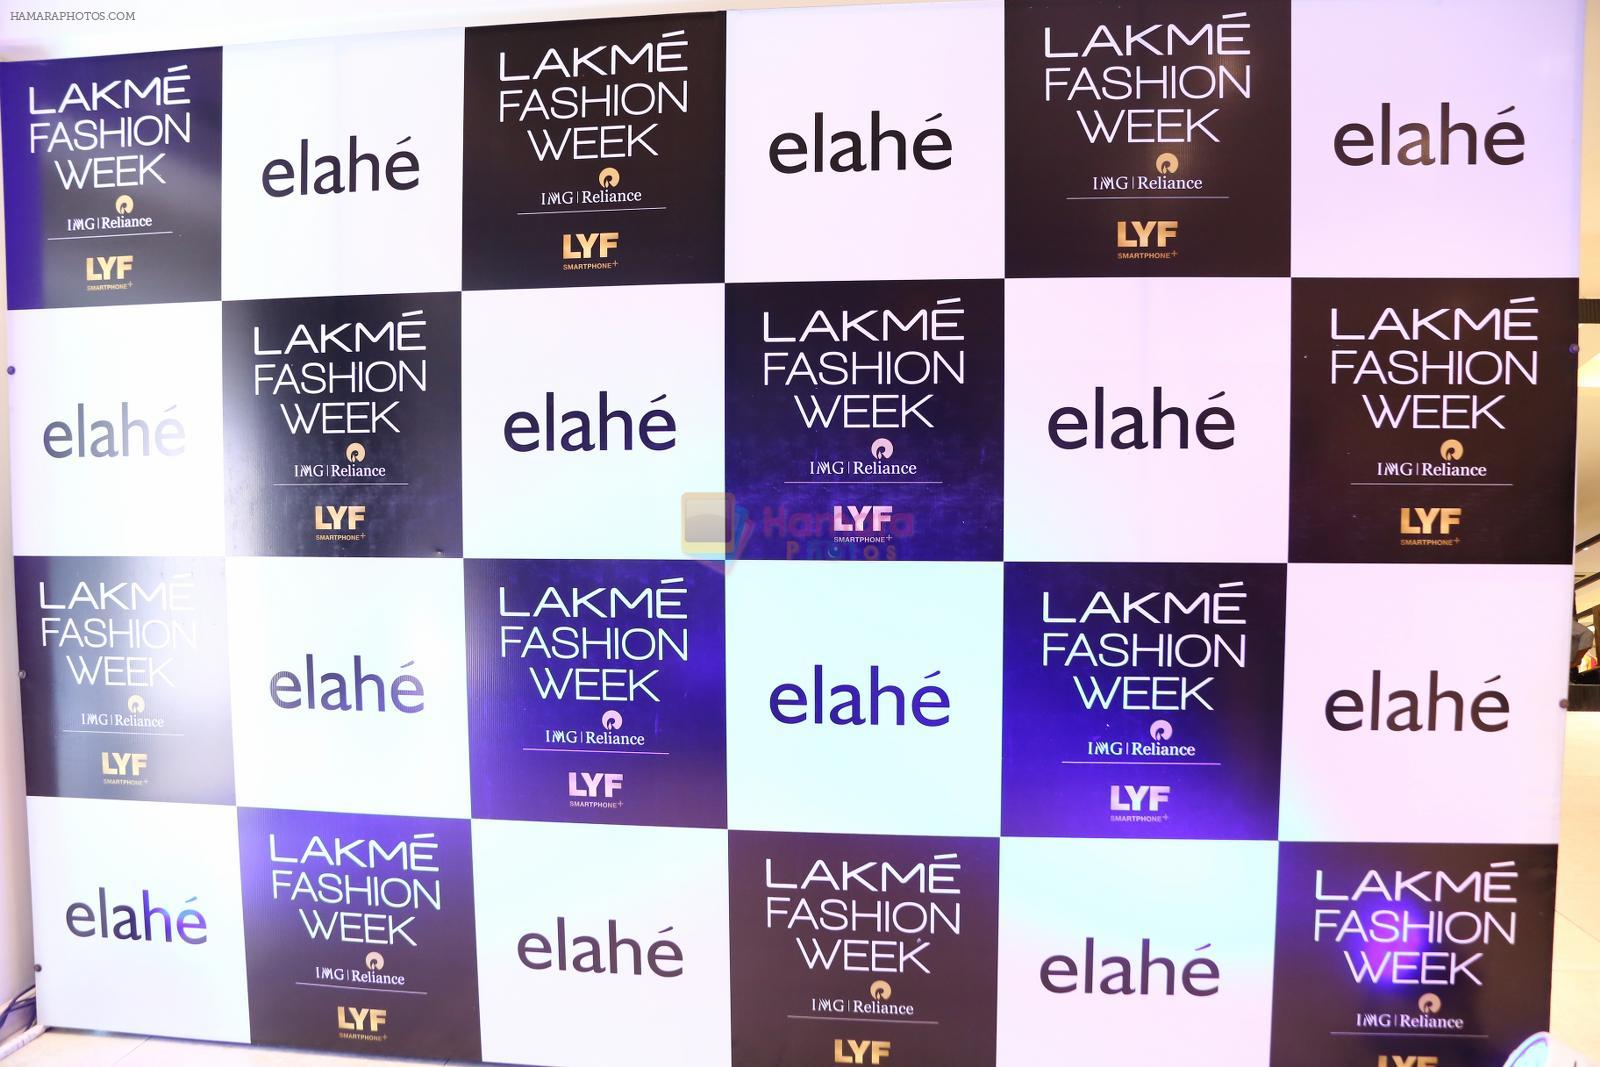 at Lakme Fashion Week at Elahe and Heroines on 18th Oct 2016